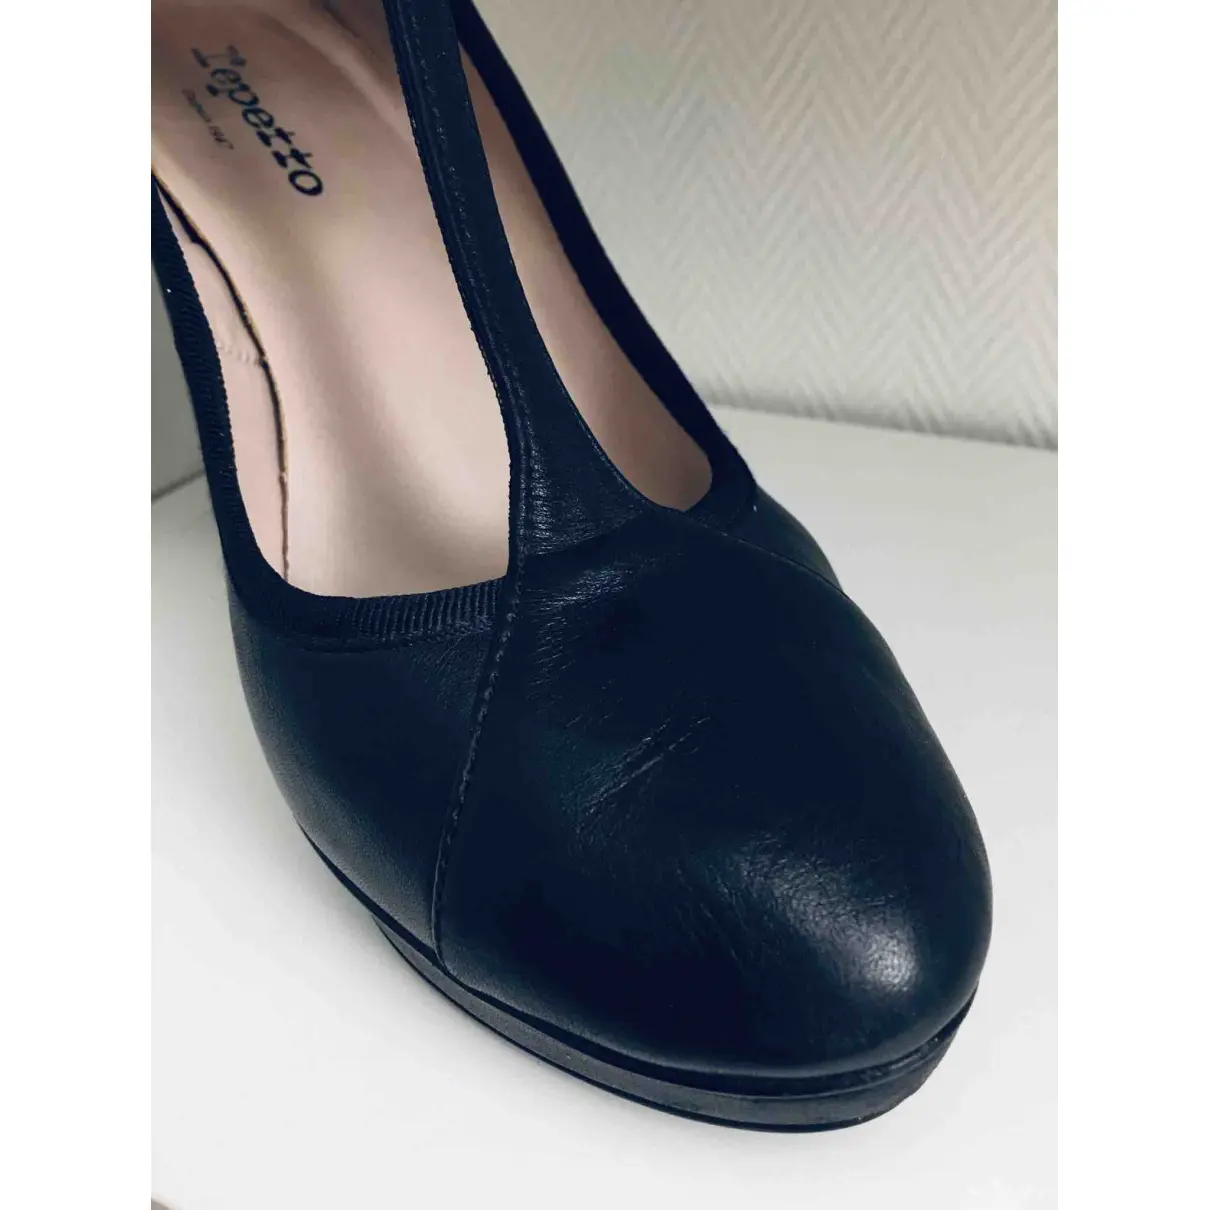 Buy Repetto Leather heels online